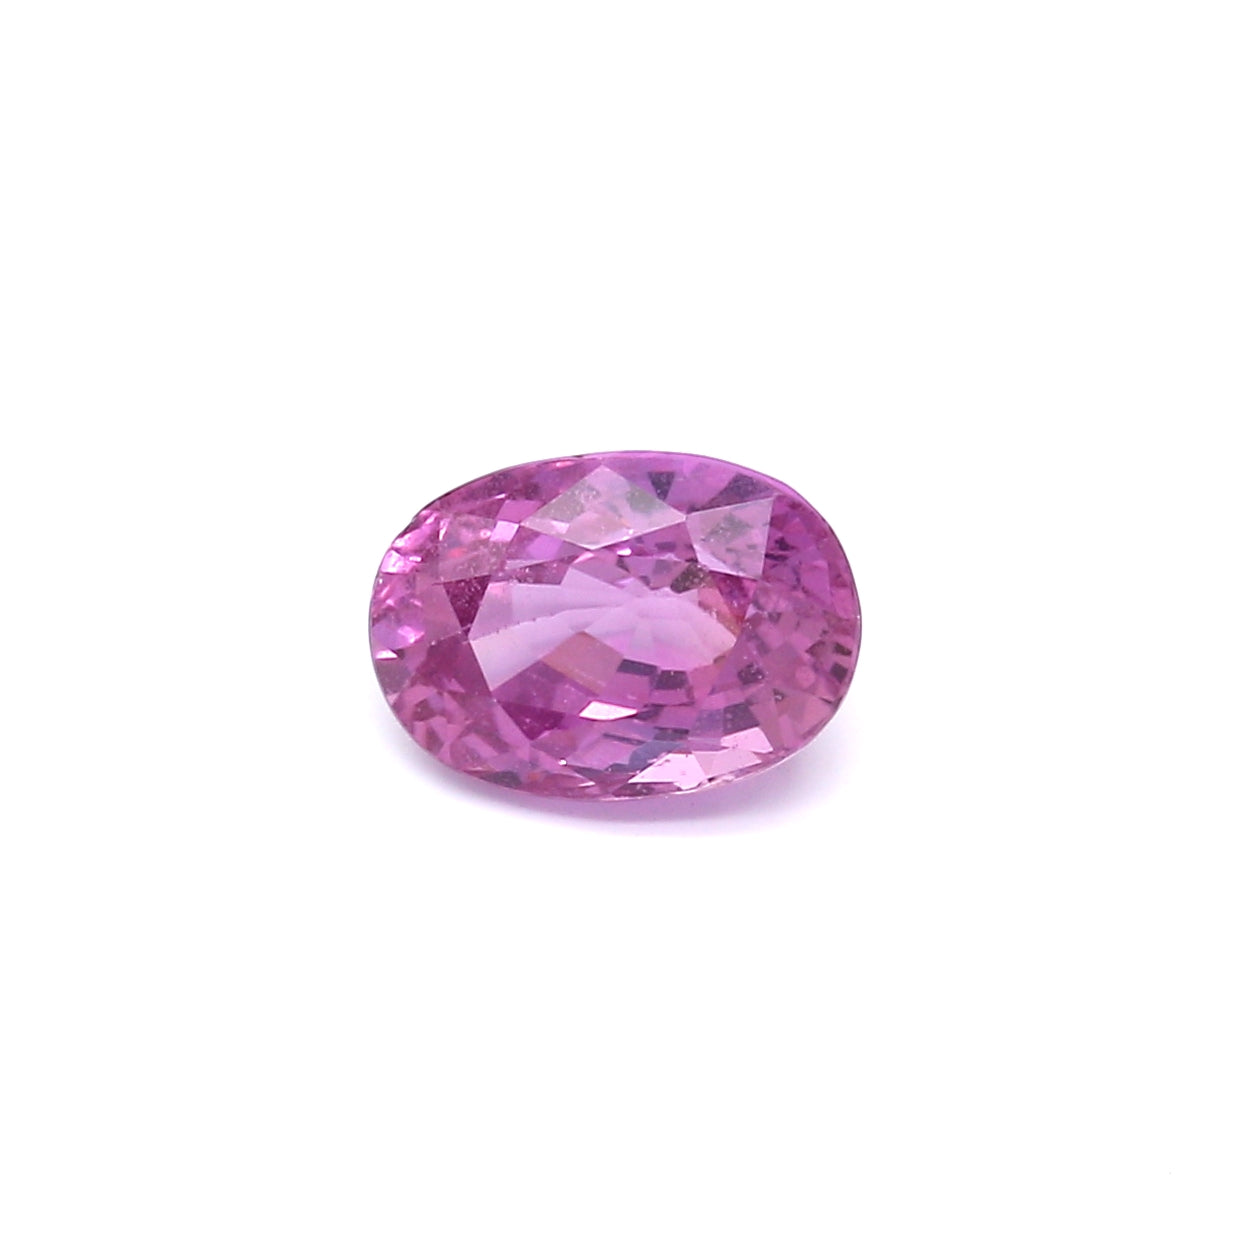 2.47ct Purplish Pink, Oval Sapphire, Heated, Madagascar - 8.79 x 6.17 x 5.09mm